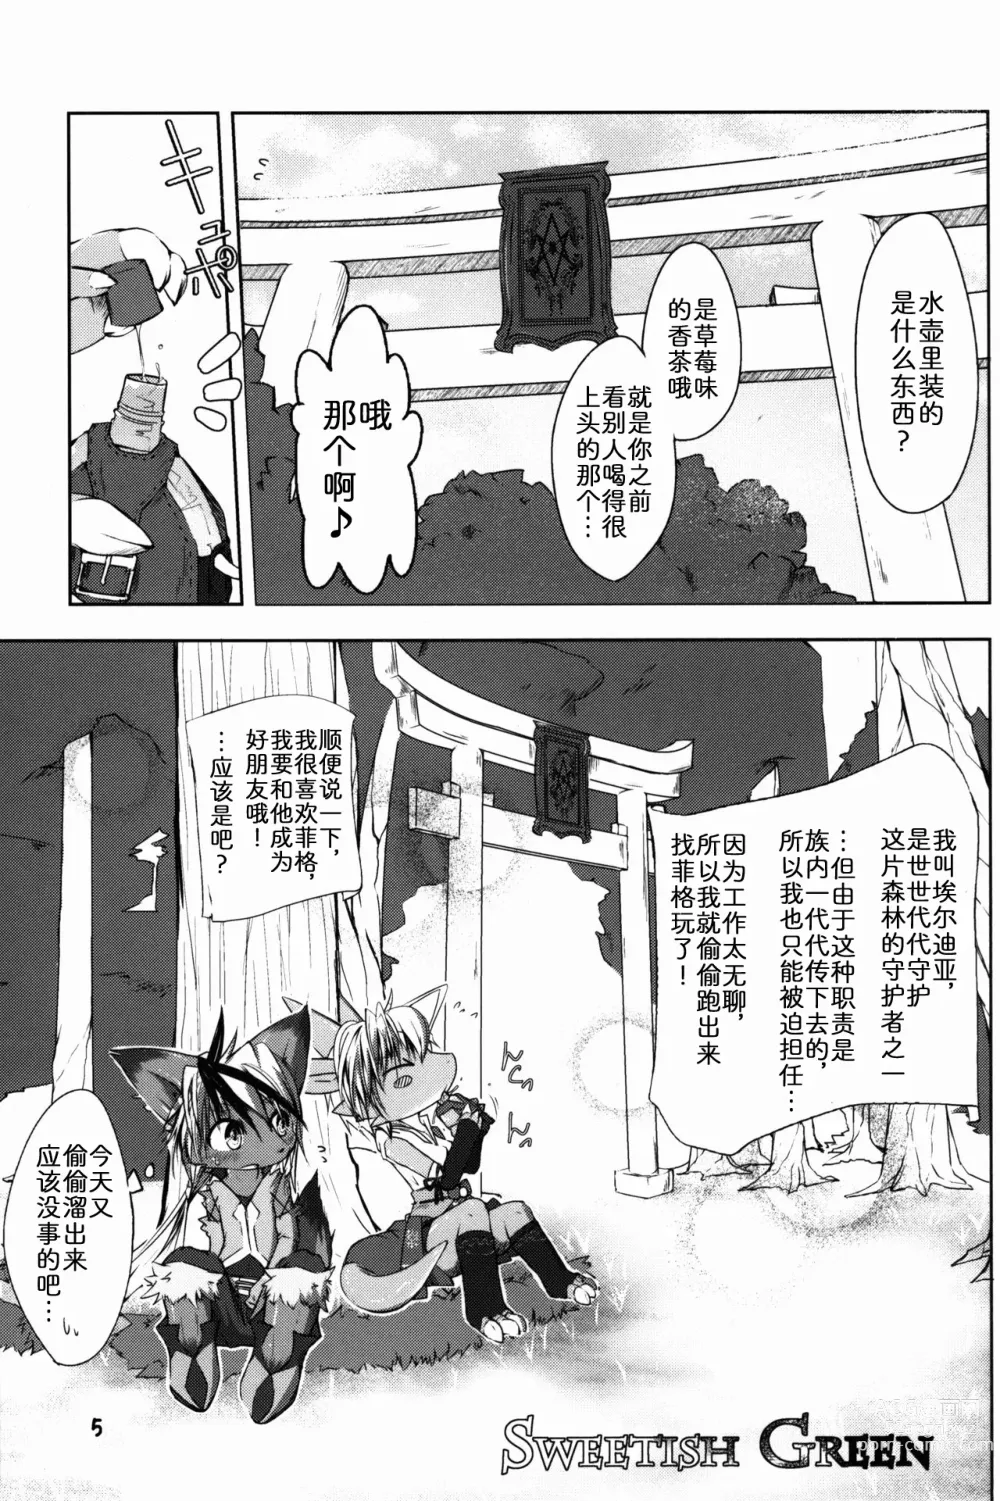 Page 5 of doujinshi SWEETISH GREEN